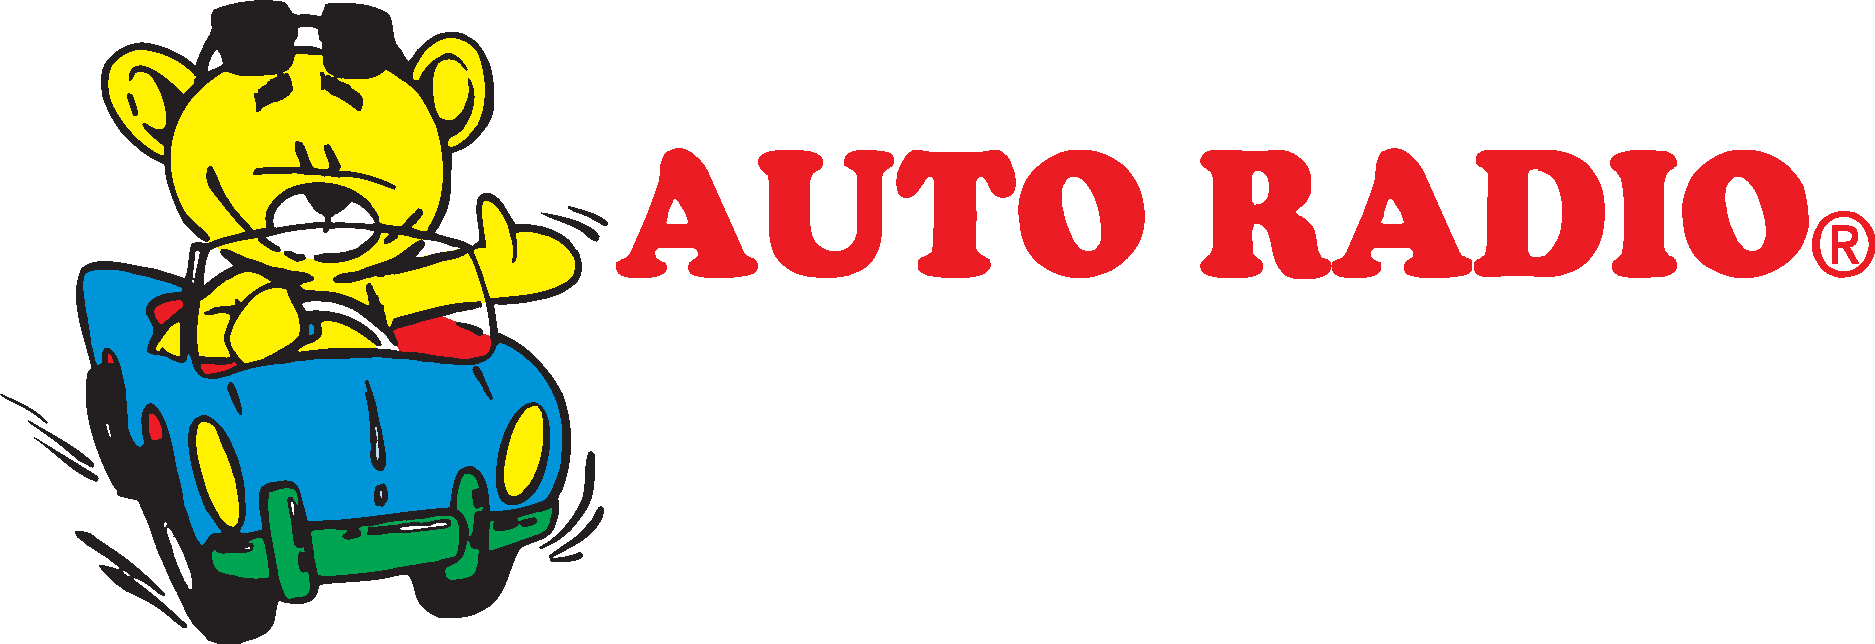 Auto Radio Logo Vector